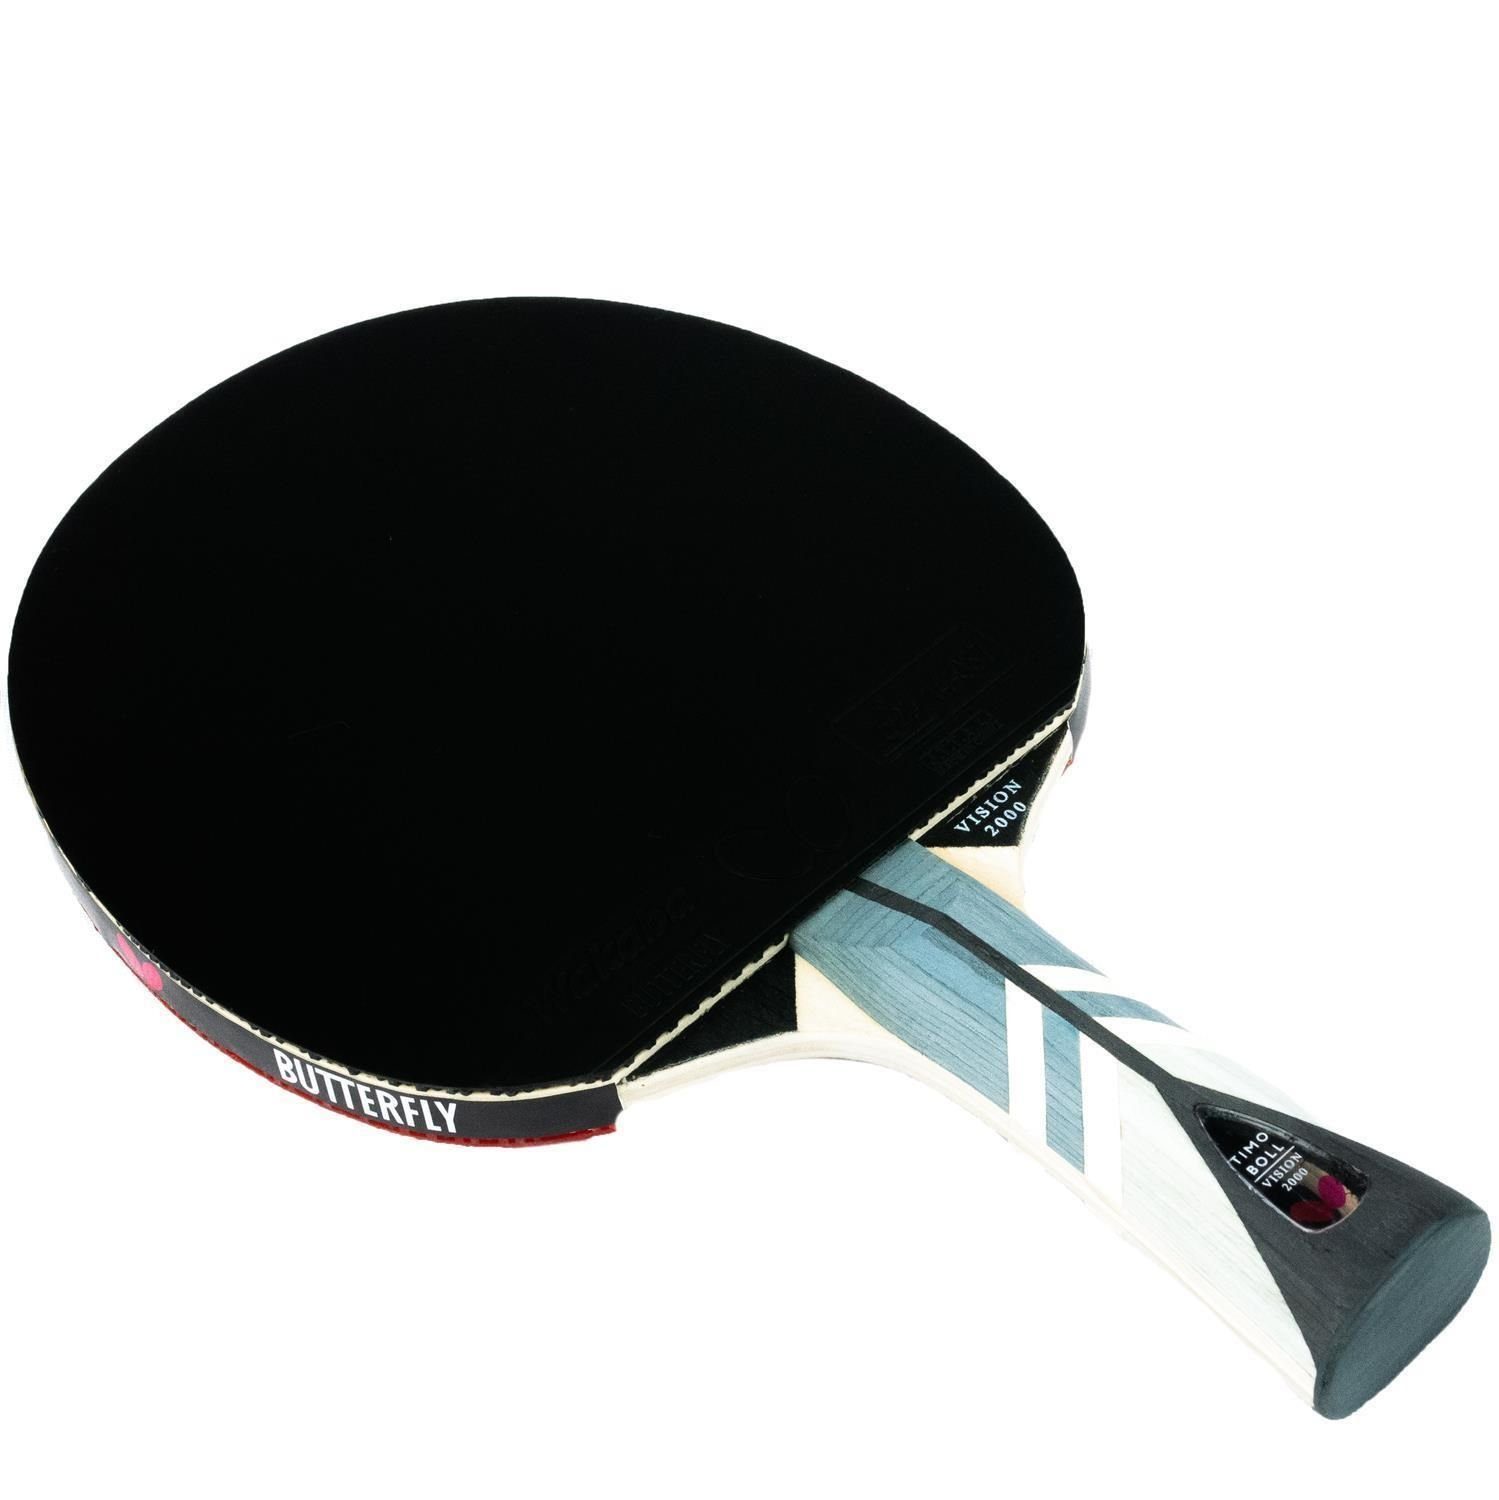 Butterfly Tischtennisschläger 1x Bälle, Drive + Tennis Tischtennisset + 2000 1 Table Case Boll Set Schläger Tischtennis Timo Bat Vision Racket